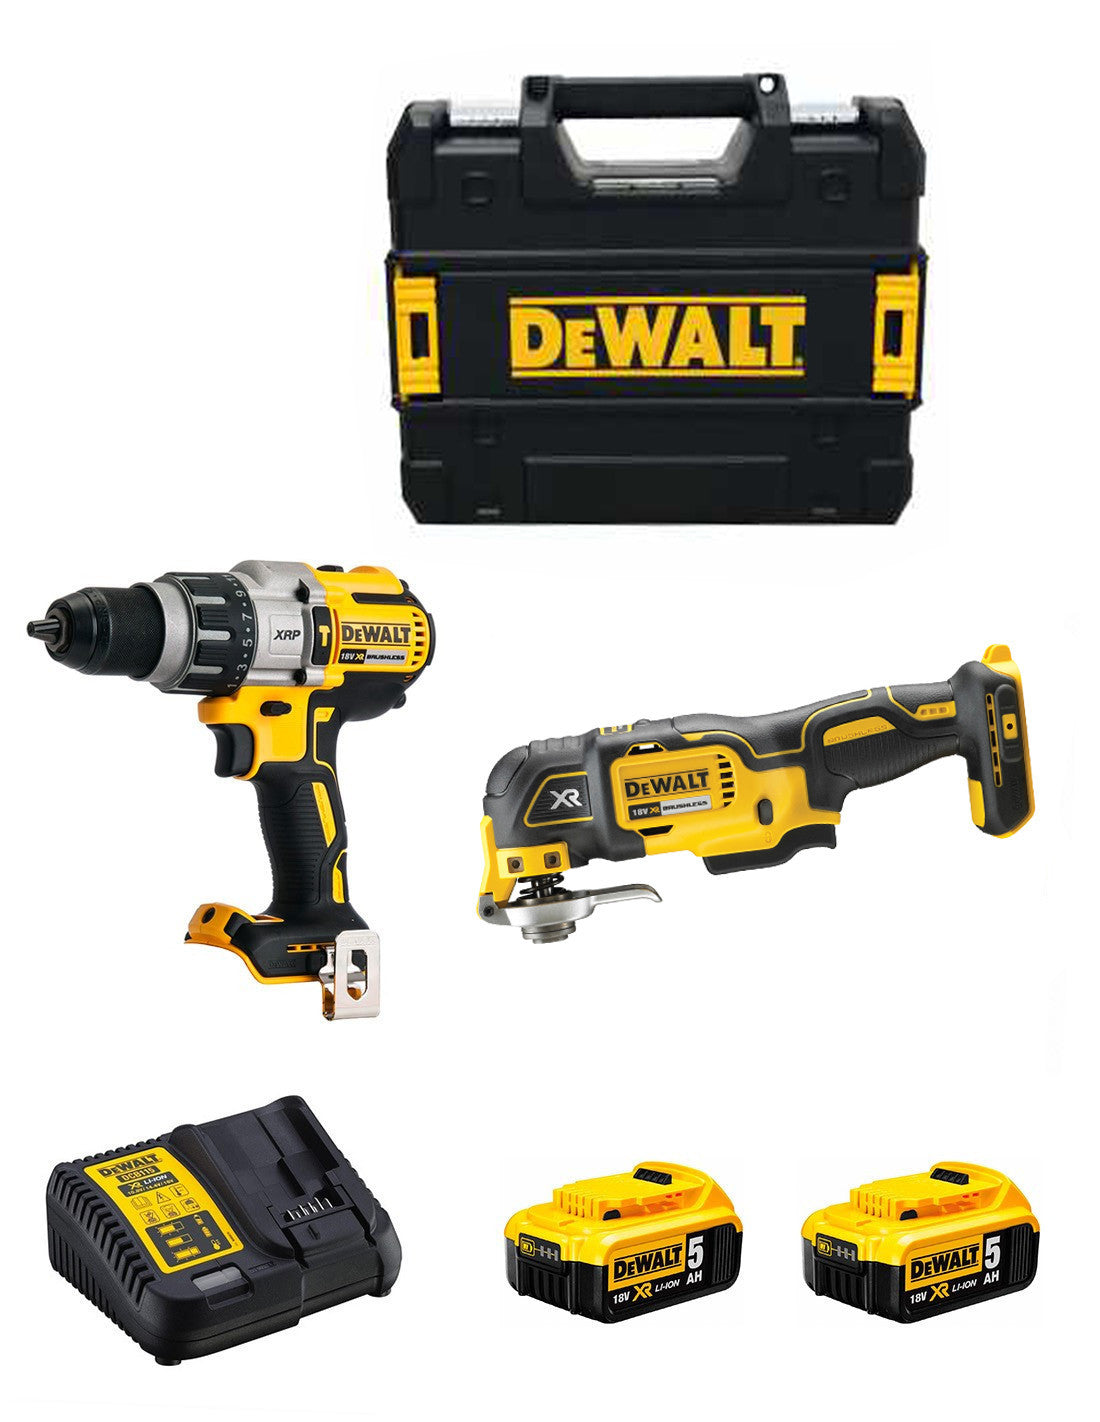 Dewalt DCD996 Hammer Drill Kit + DCS355 Multi-tool + 2bat 5Ah + charger + DCK280P2 Briefcase